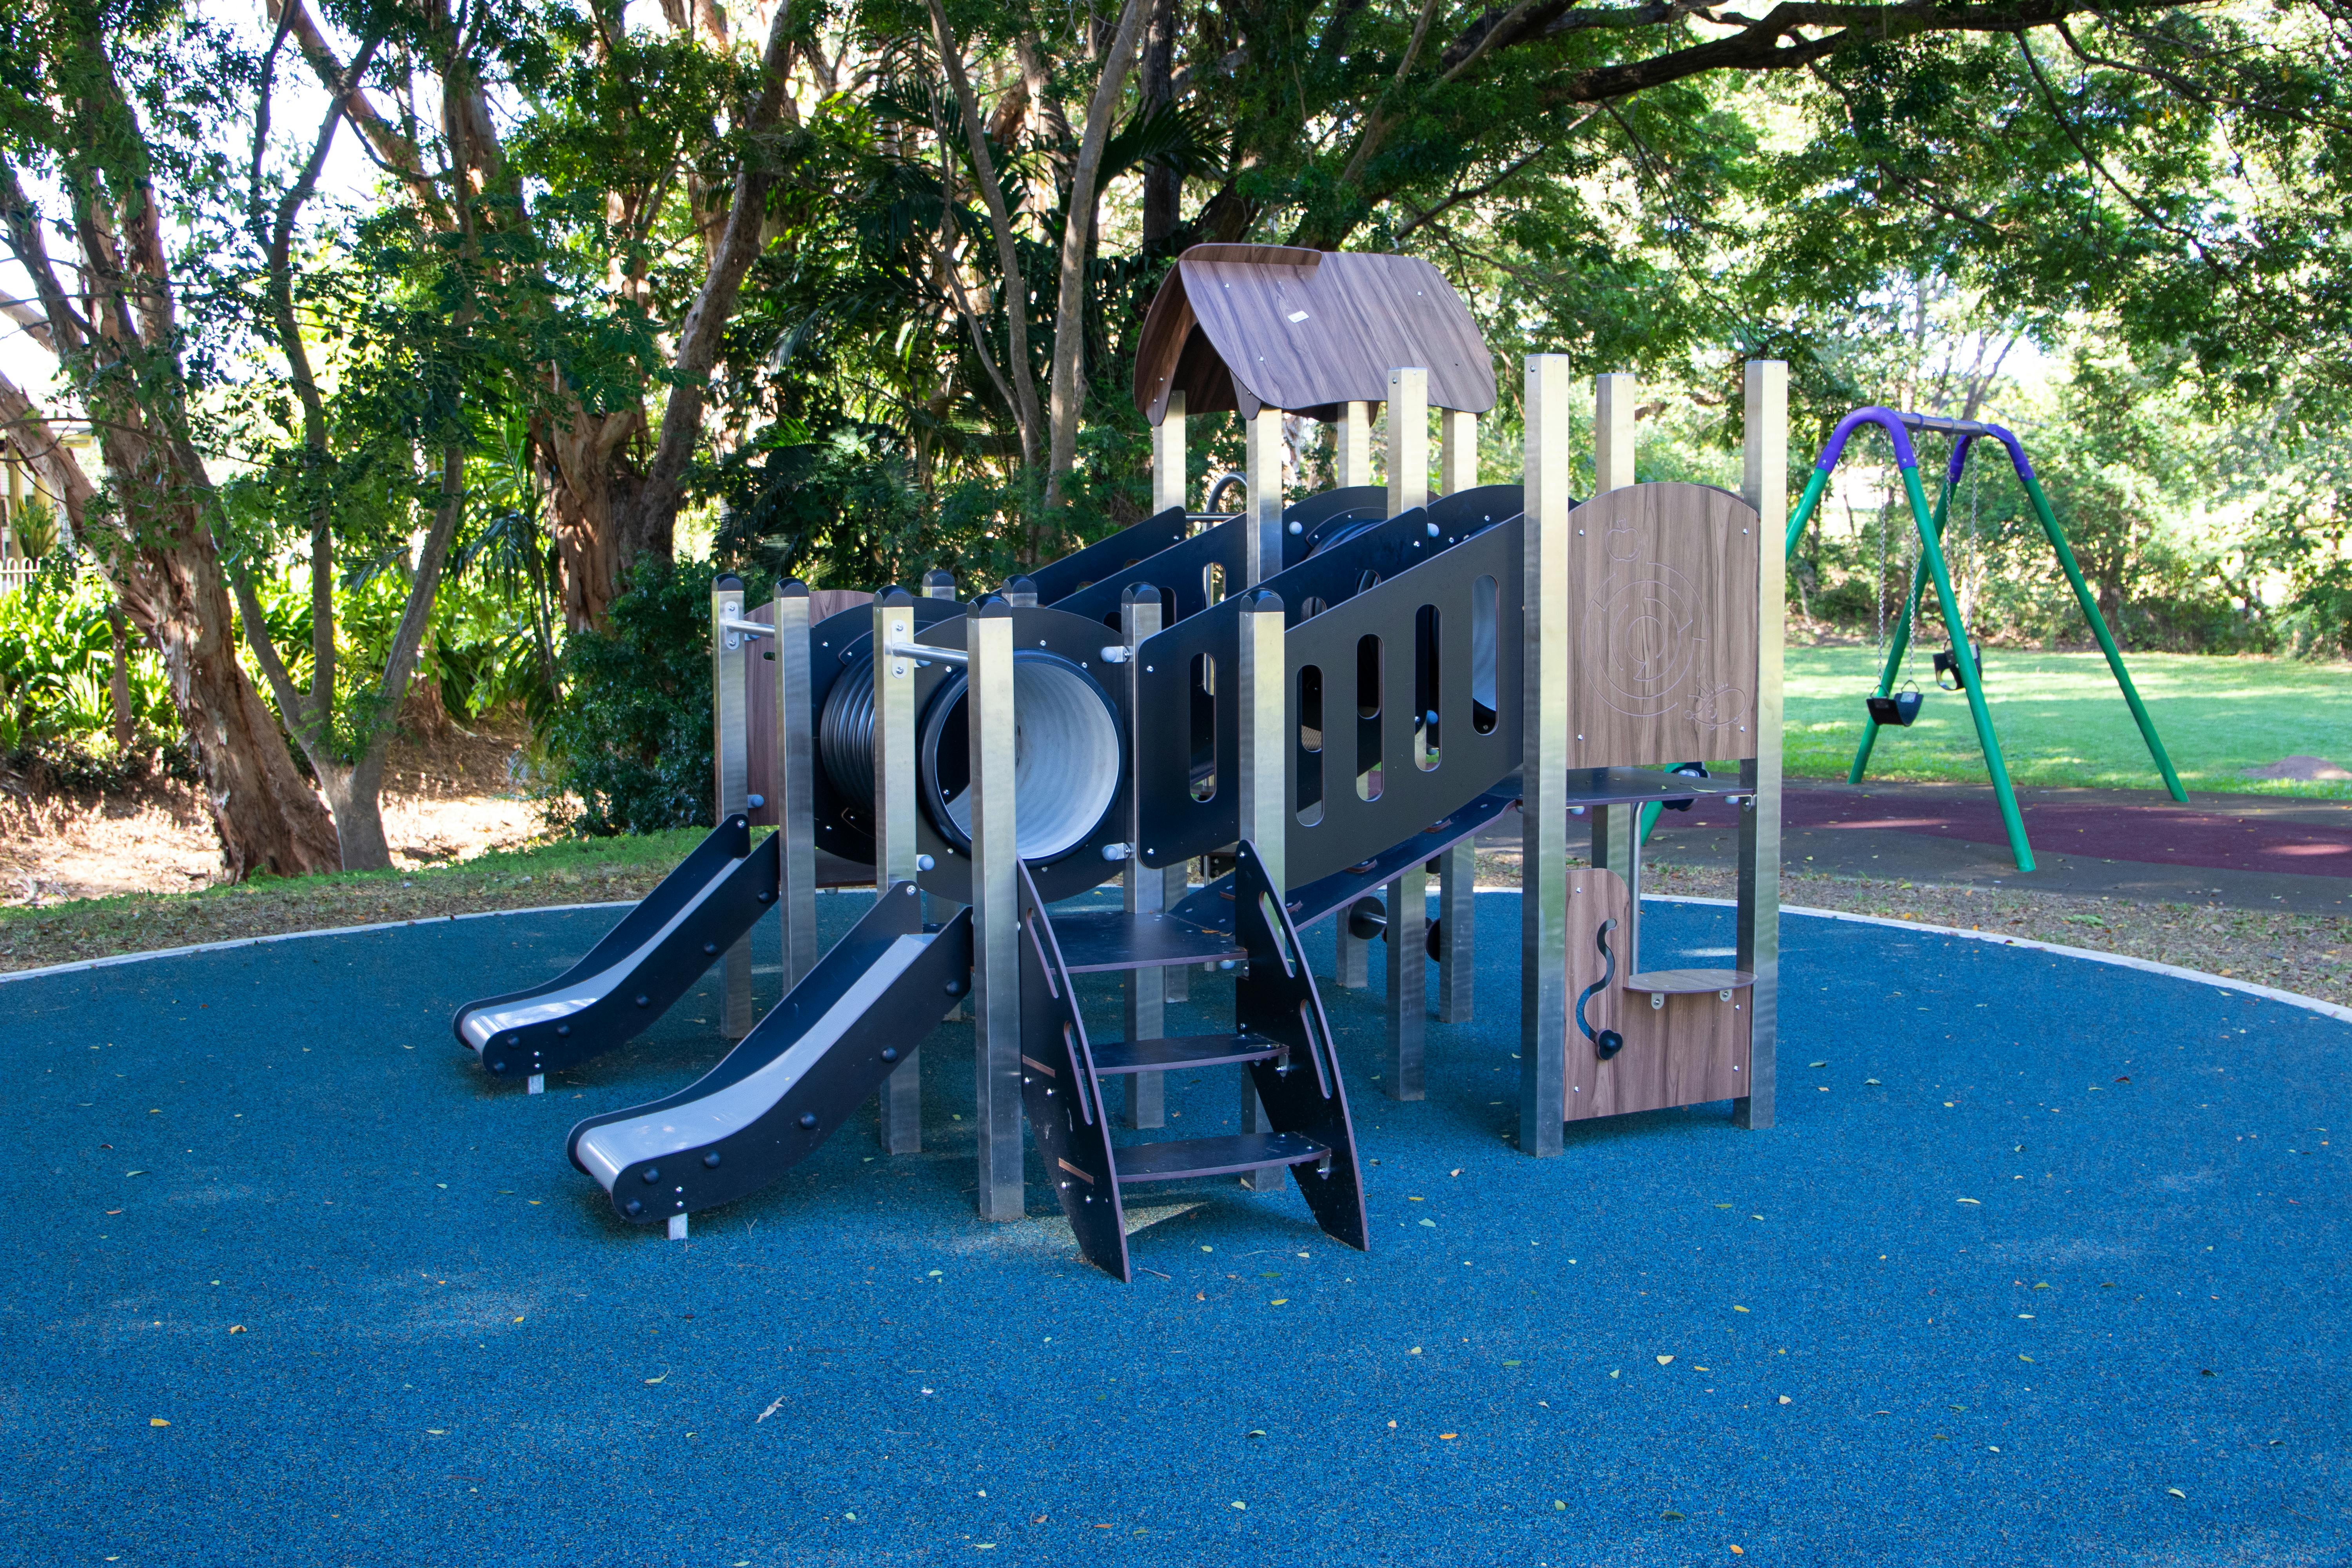 MacArthur Park Playground Improvements Complete 